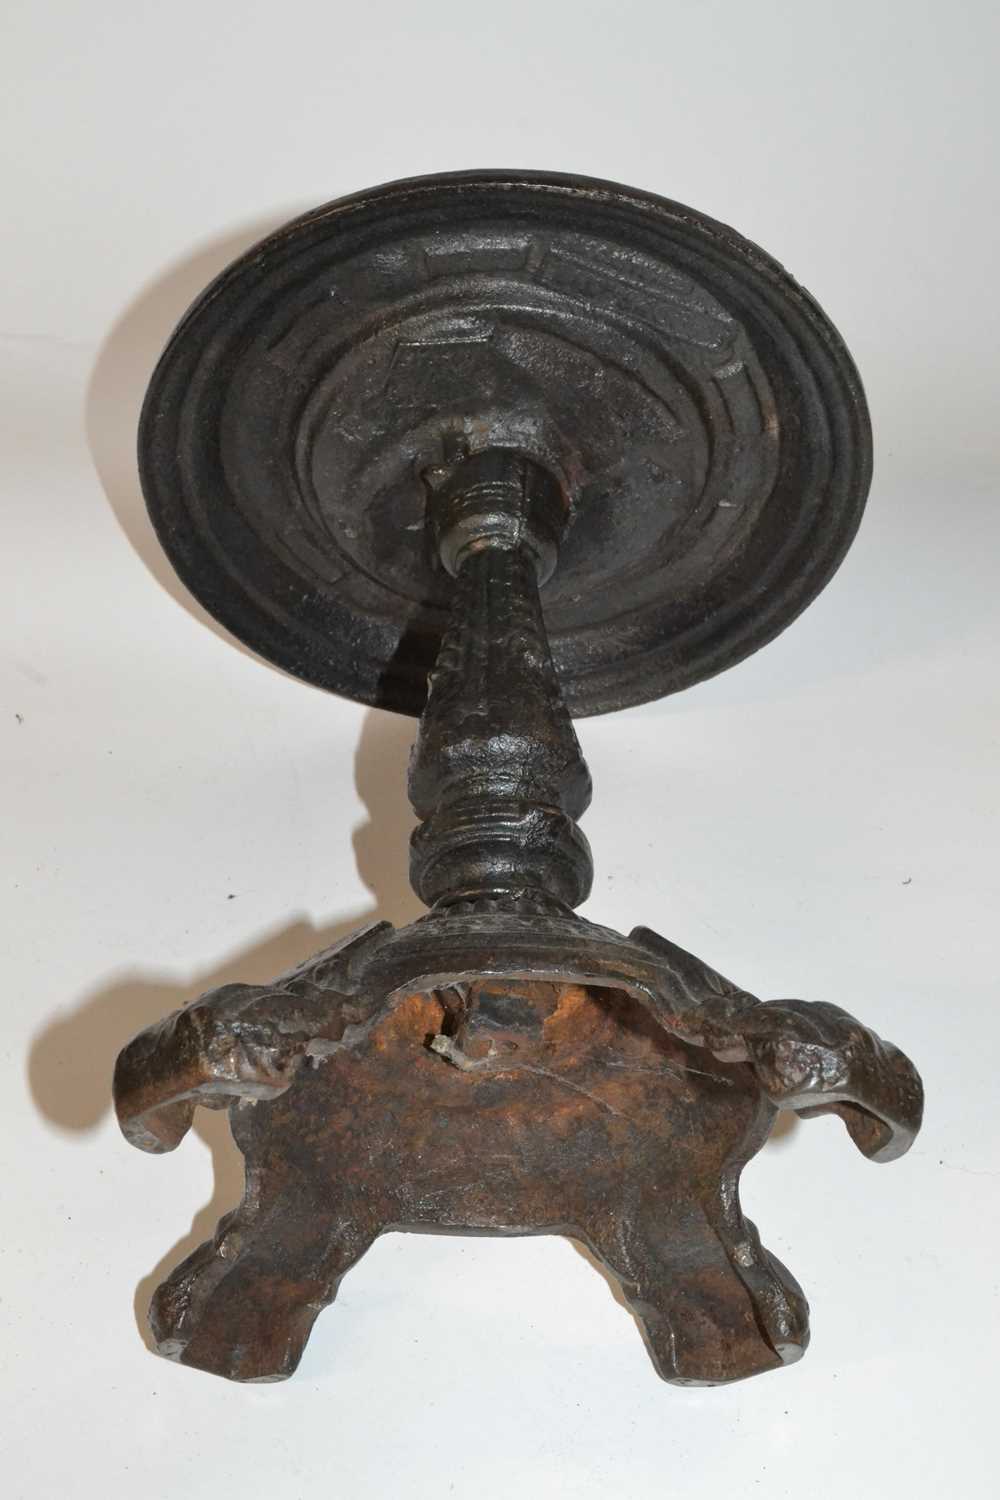 Novelty cast iron stand or trivet marked Auld Lang Syne, 27cm high - Image 2 of 4